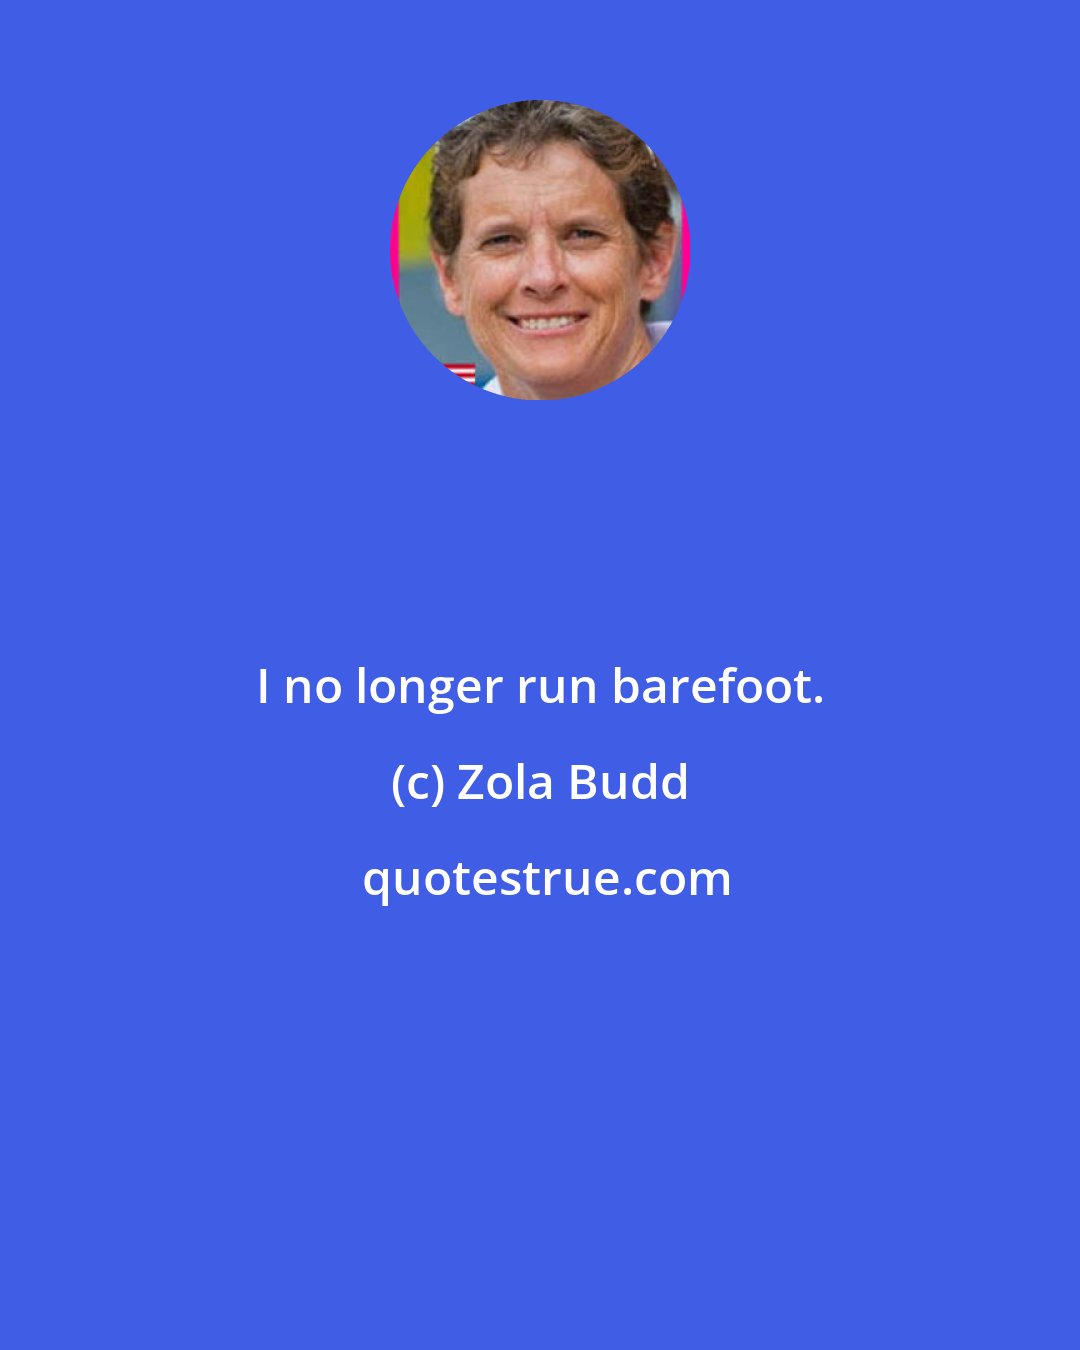 Zola Budd: I no longer run barefoot.